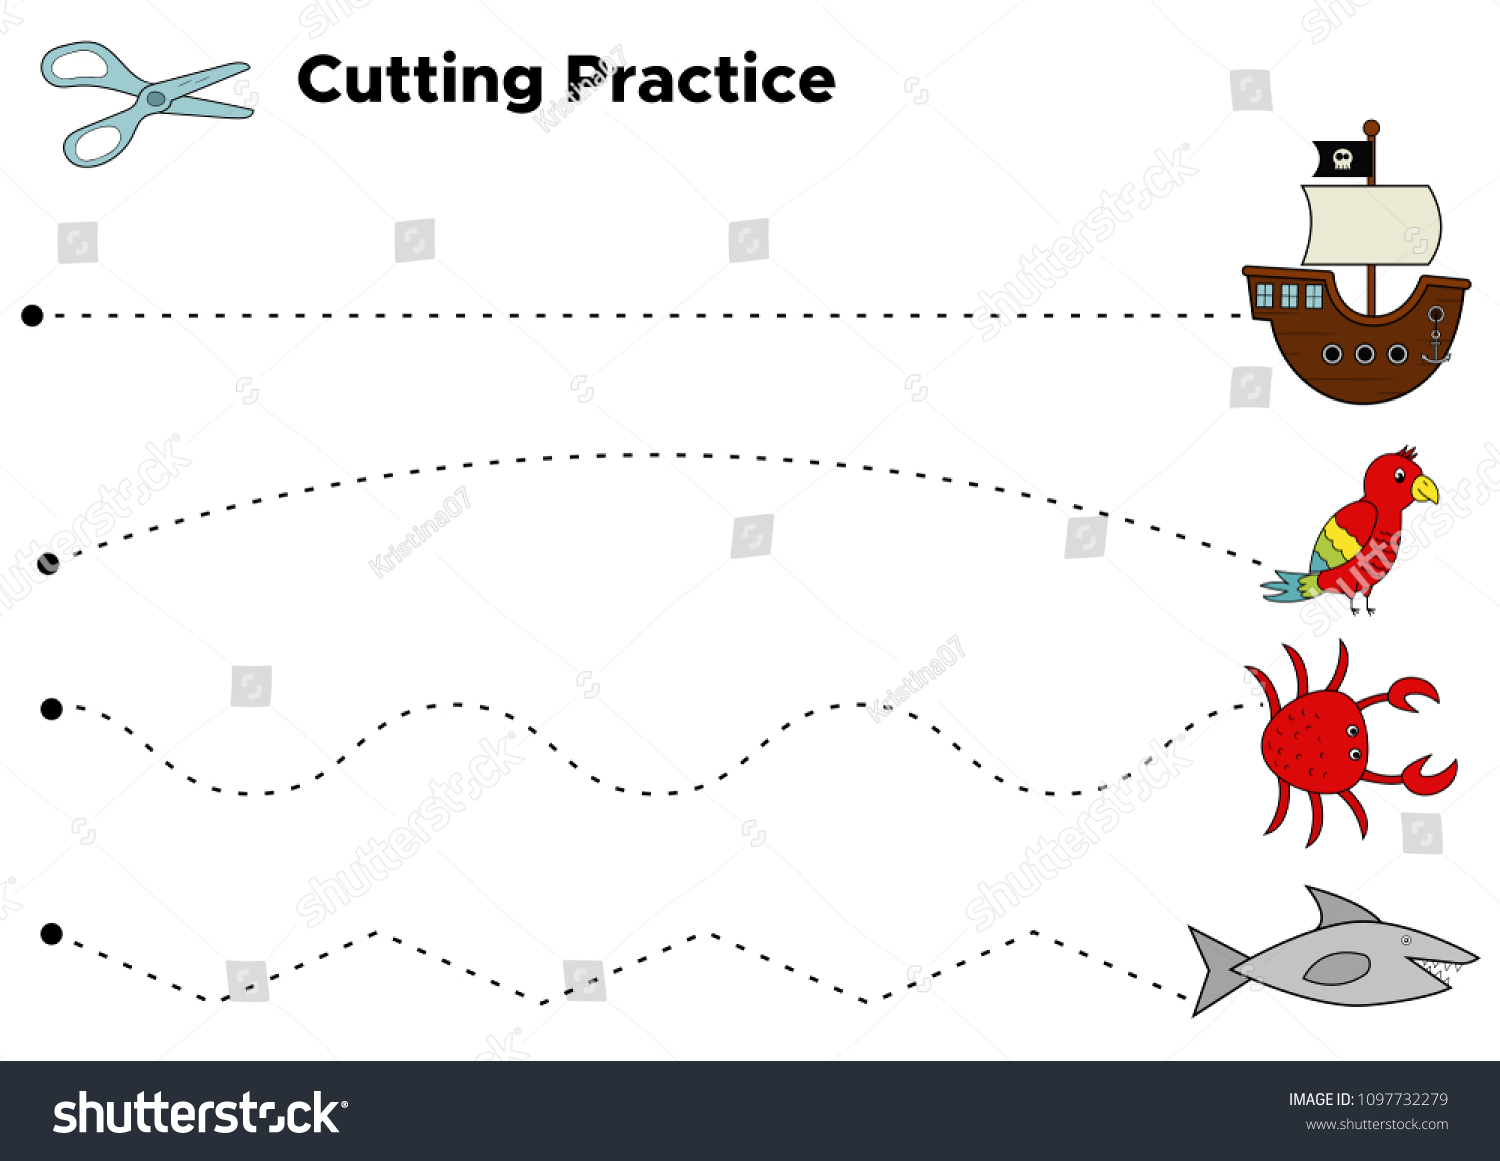 cutting practice worksheet preschool kids educational stock vector royalty free 1097732279 shutterstock